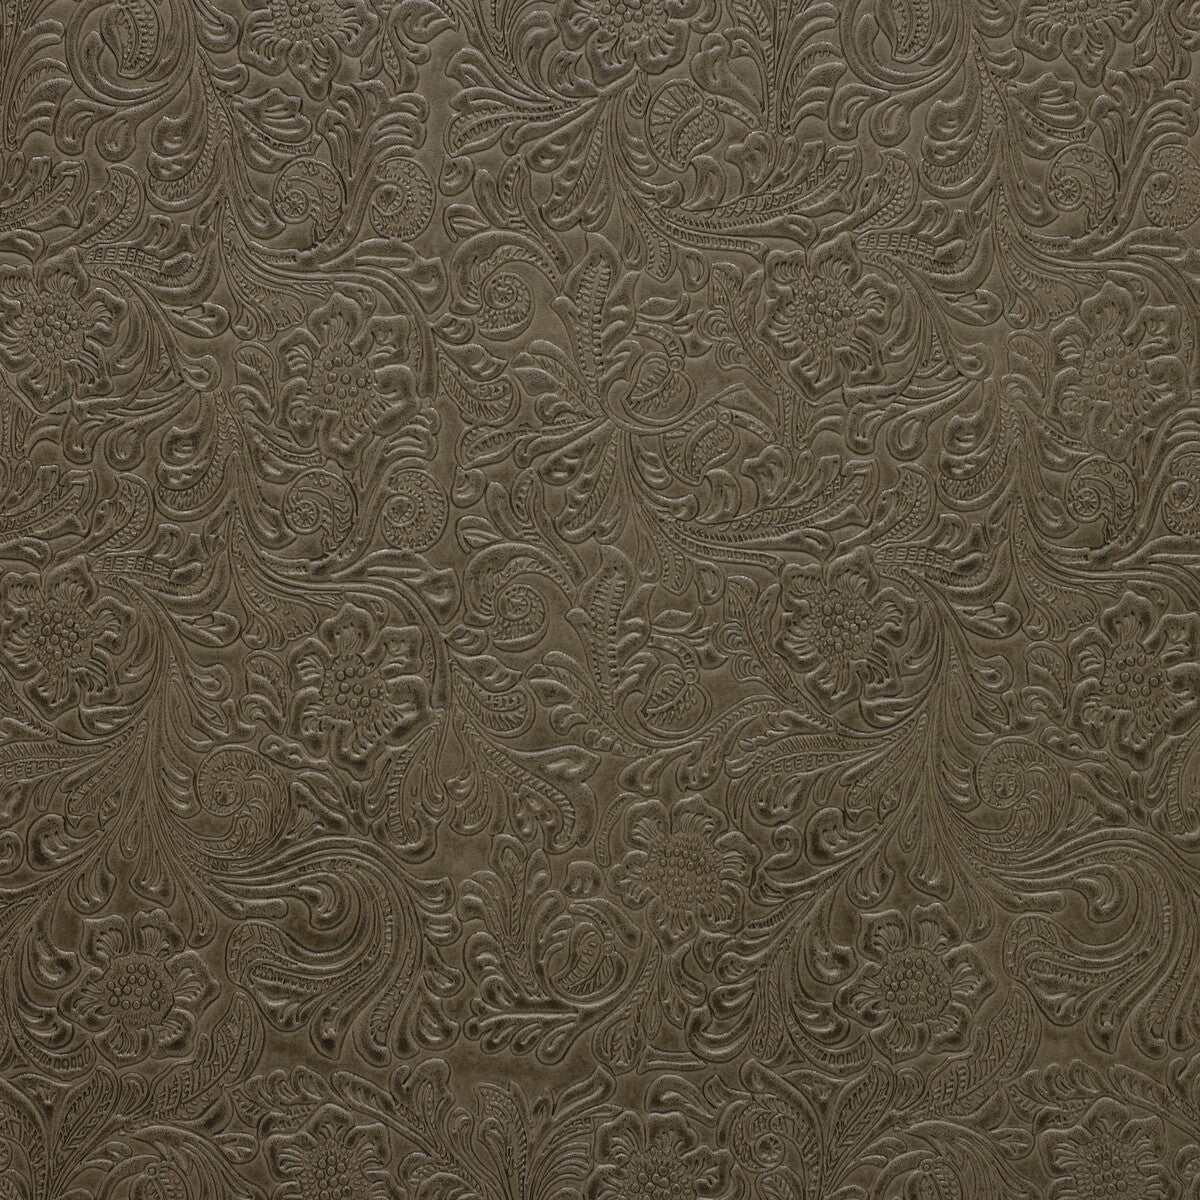 Kravet Design fabric in donahue-106 color - pattern DONAHUE.106.0 - by Kravet Design